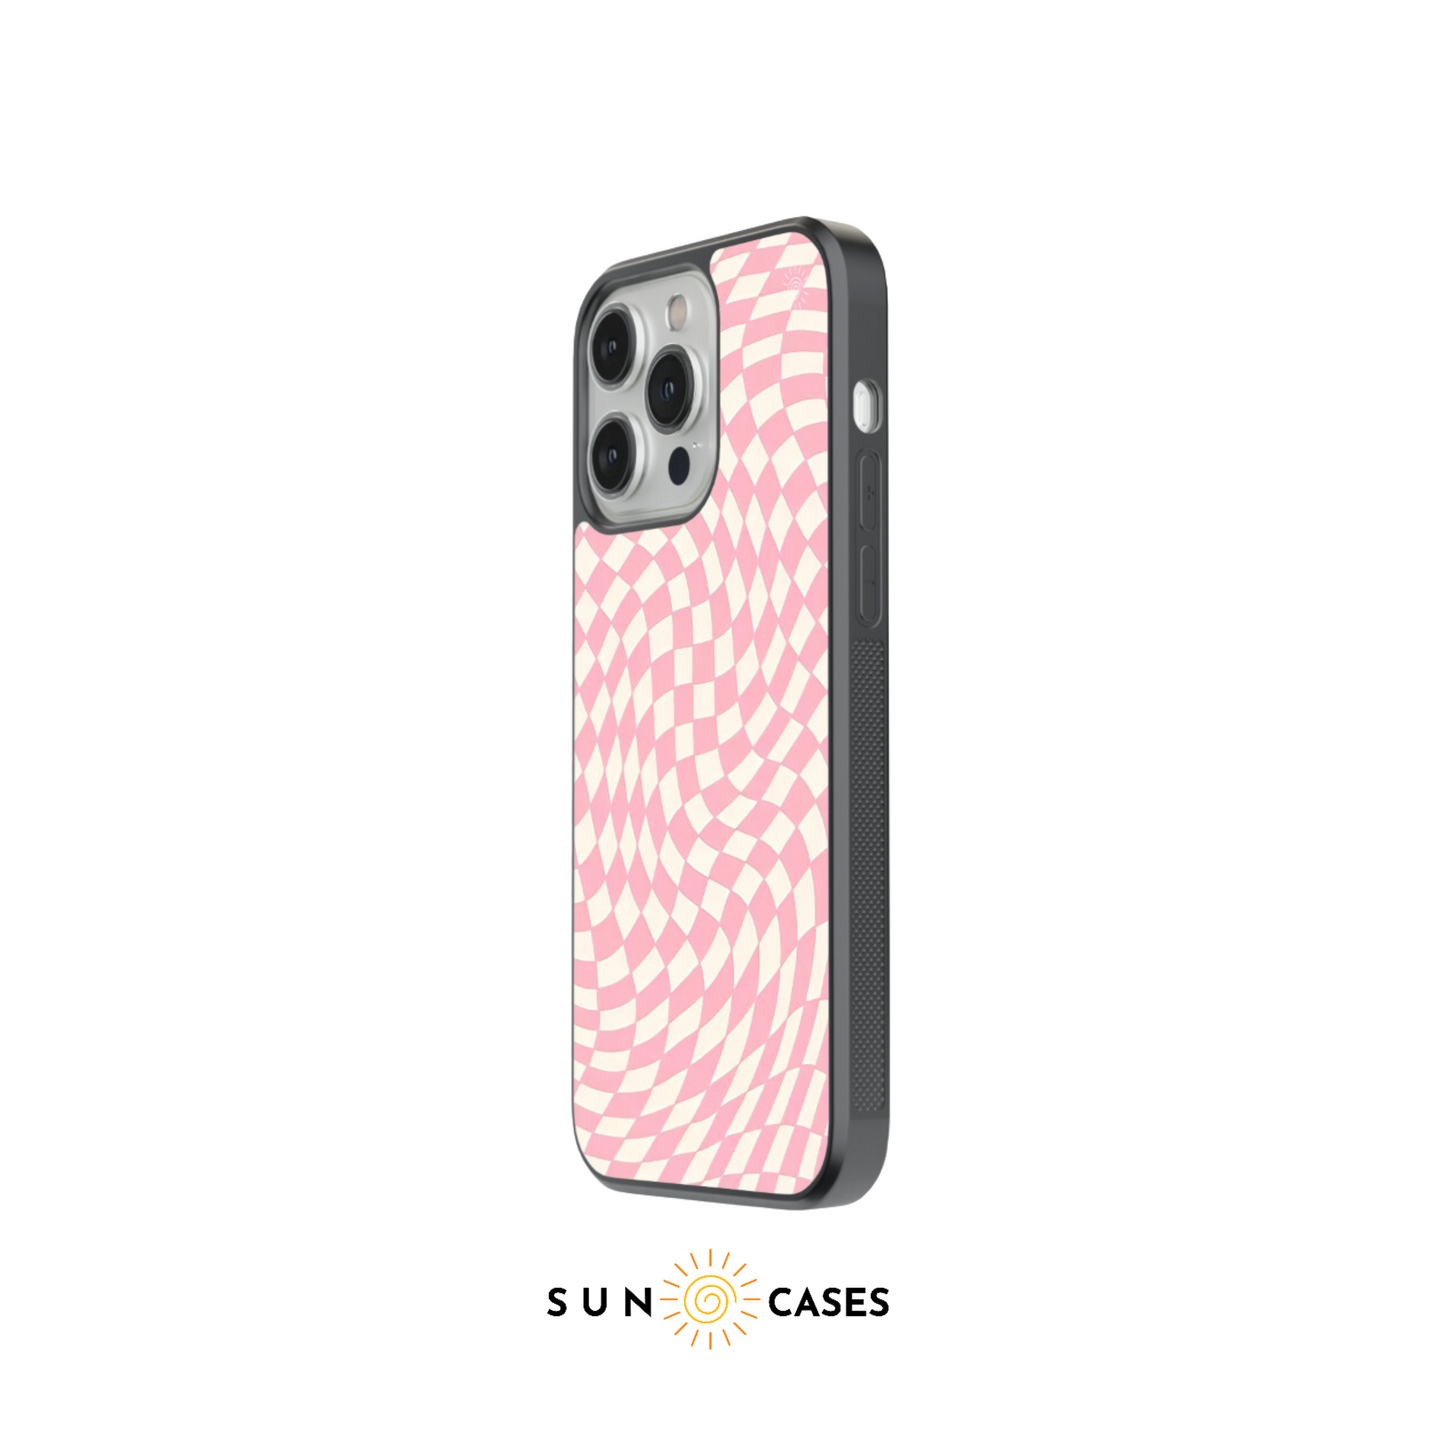 Checkered Case -  Pink Checkered